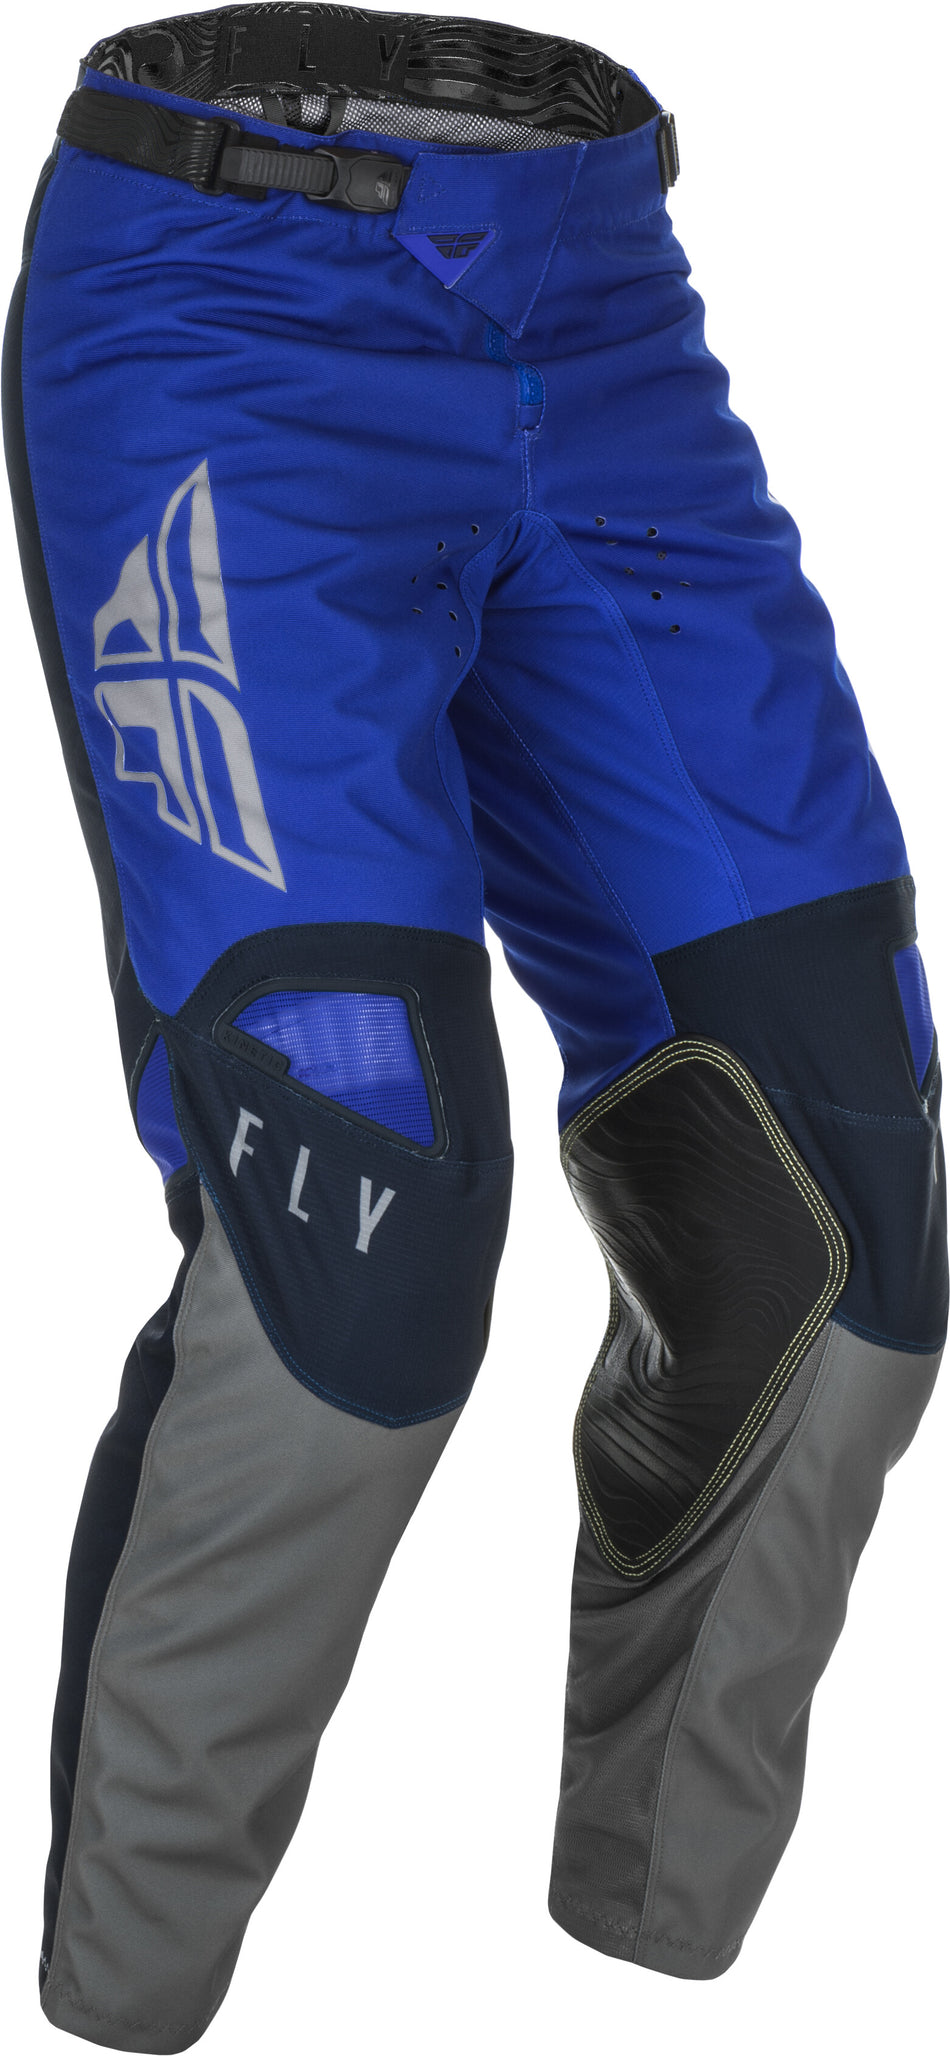 FLY RACING Youth Kinetic K121 Pants Blue/Navy/Grey Sz 18 374-43118